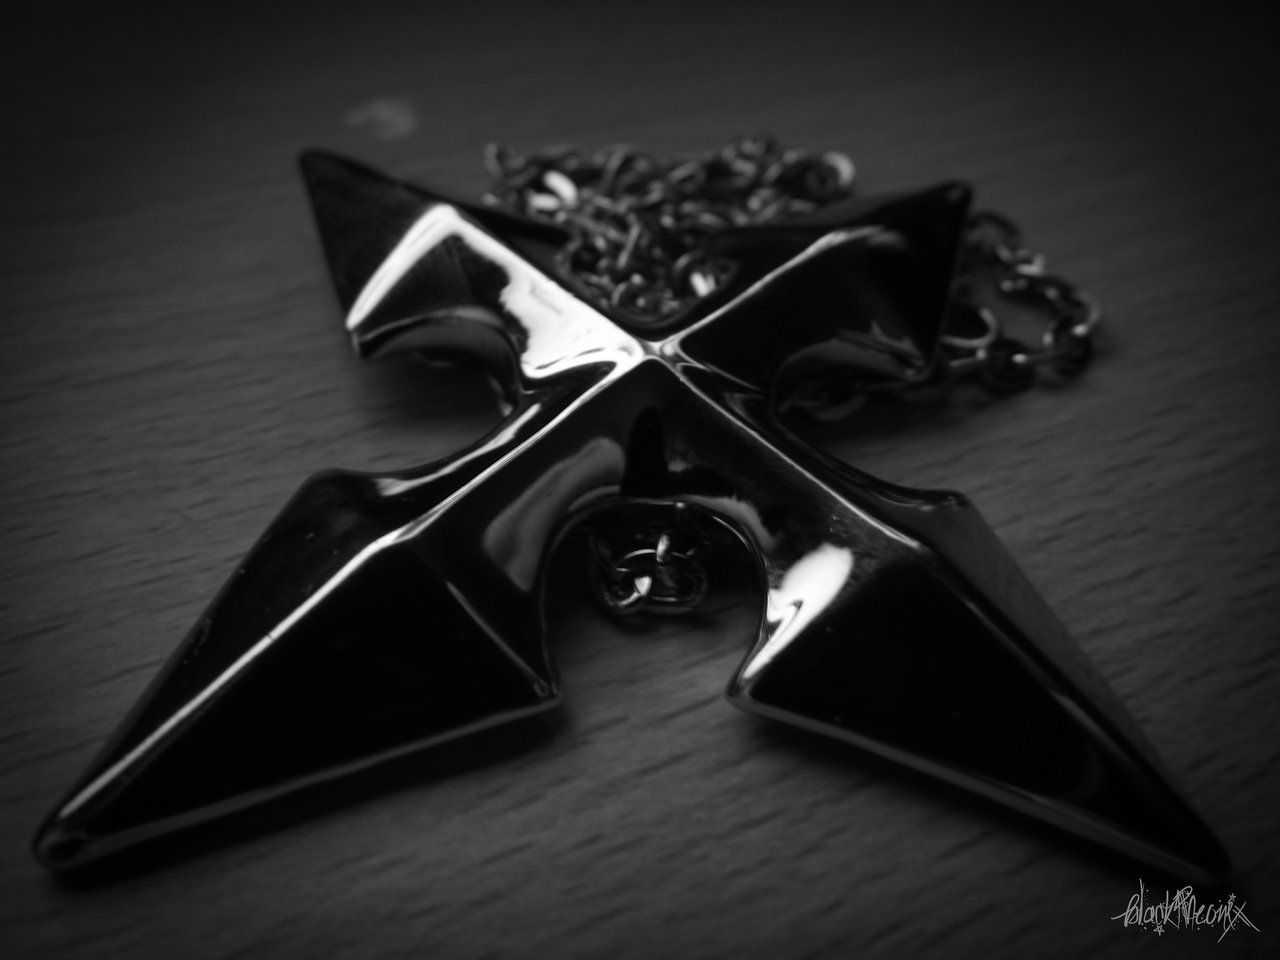 KH -Organization XIII Necklace by BlackPheonix81 on DeviantArt